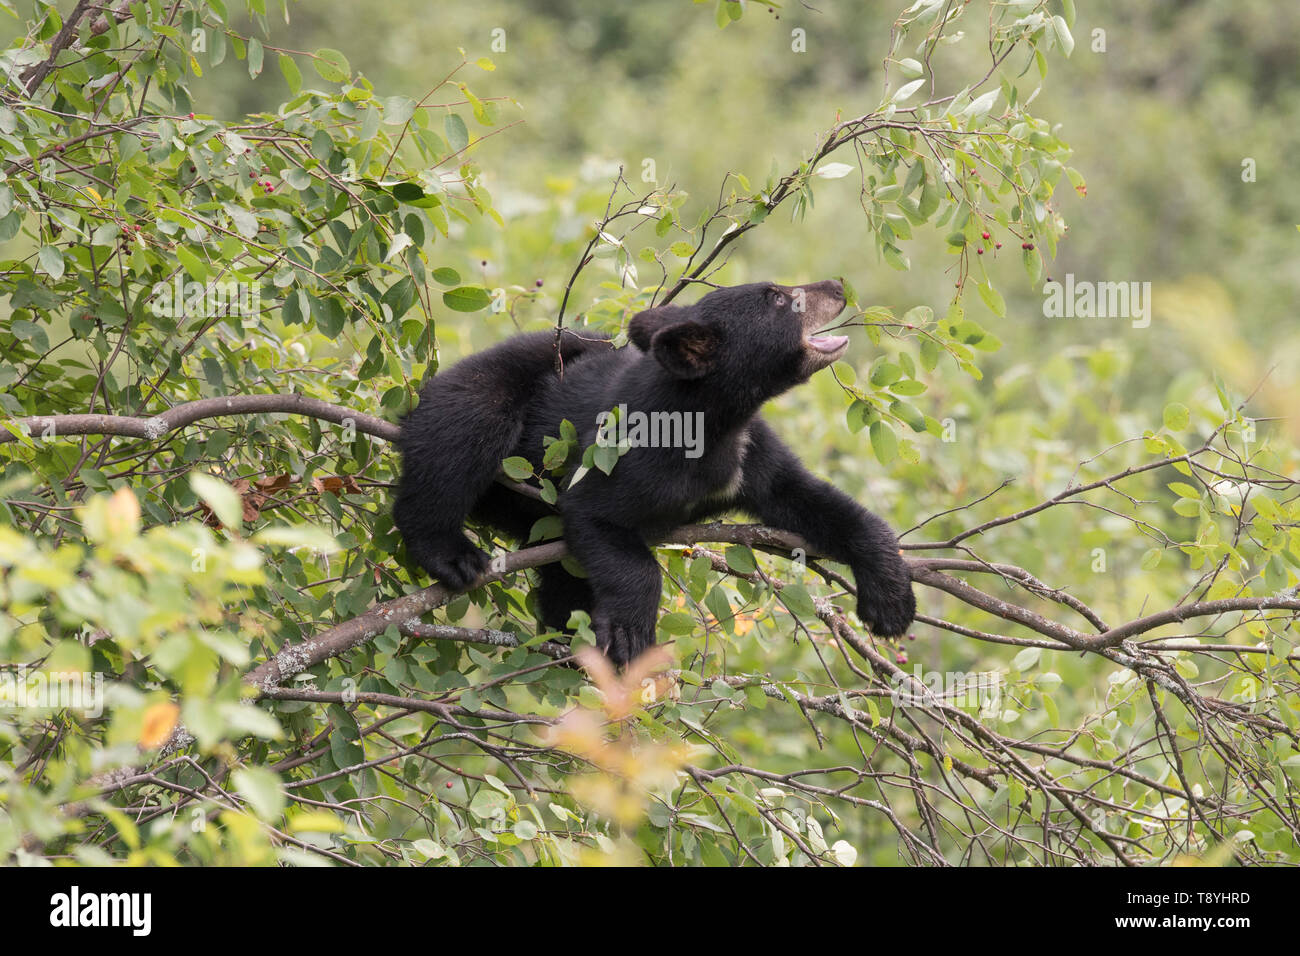 American black bear (Ursus americanus) cub eating Saskatoons/Serviceberries (Amelanchier alnifolia), near Lake Superior National Marine Conservation Area, Ontario, Canada Stock Photo